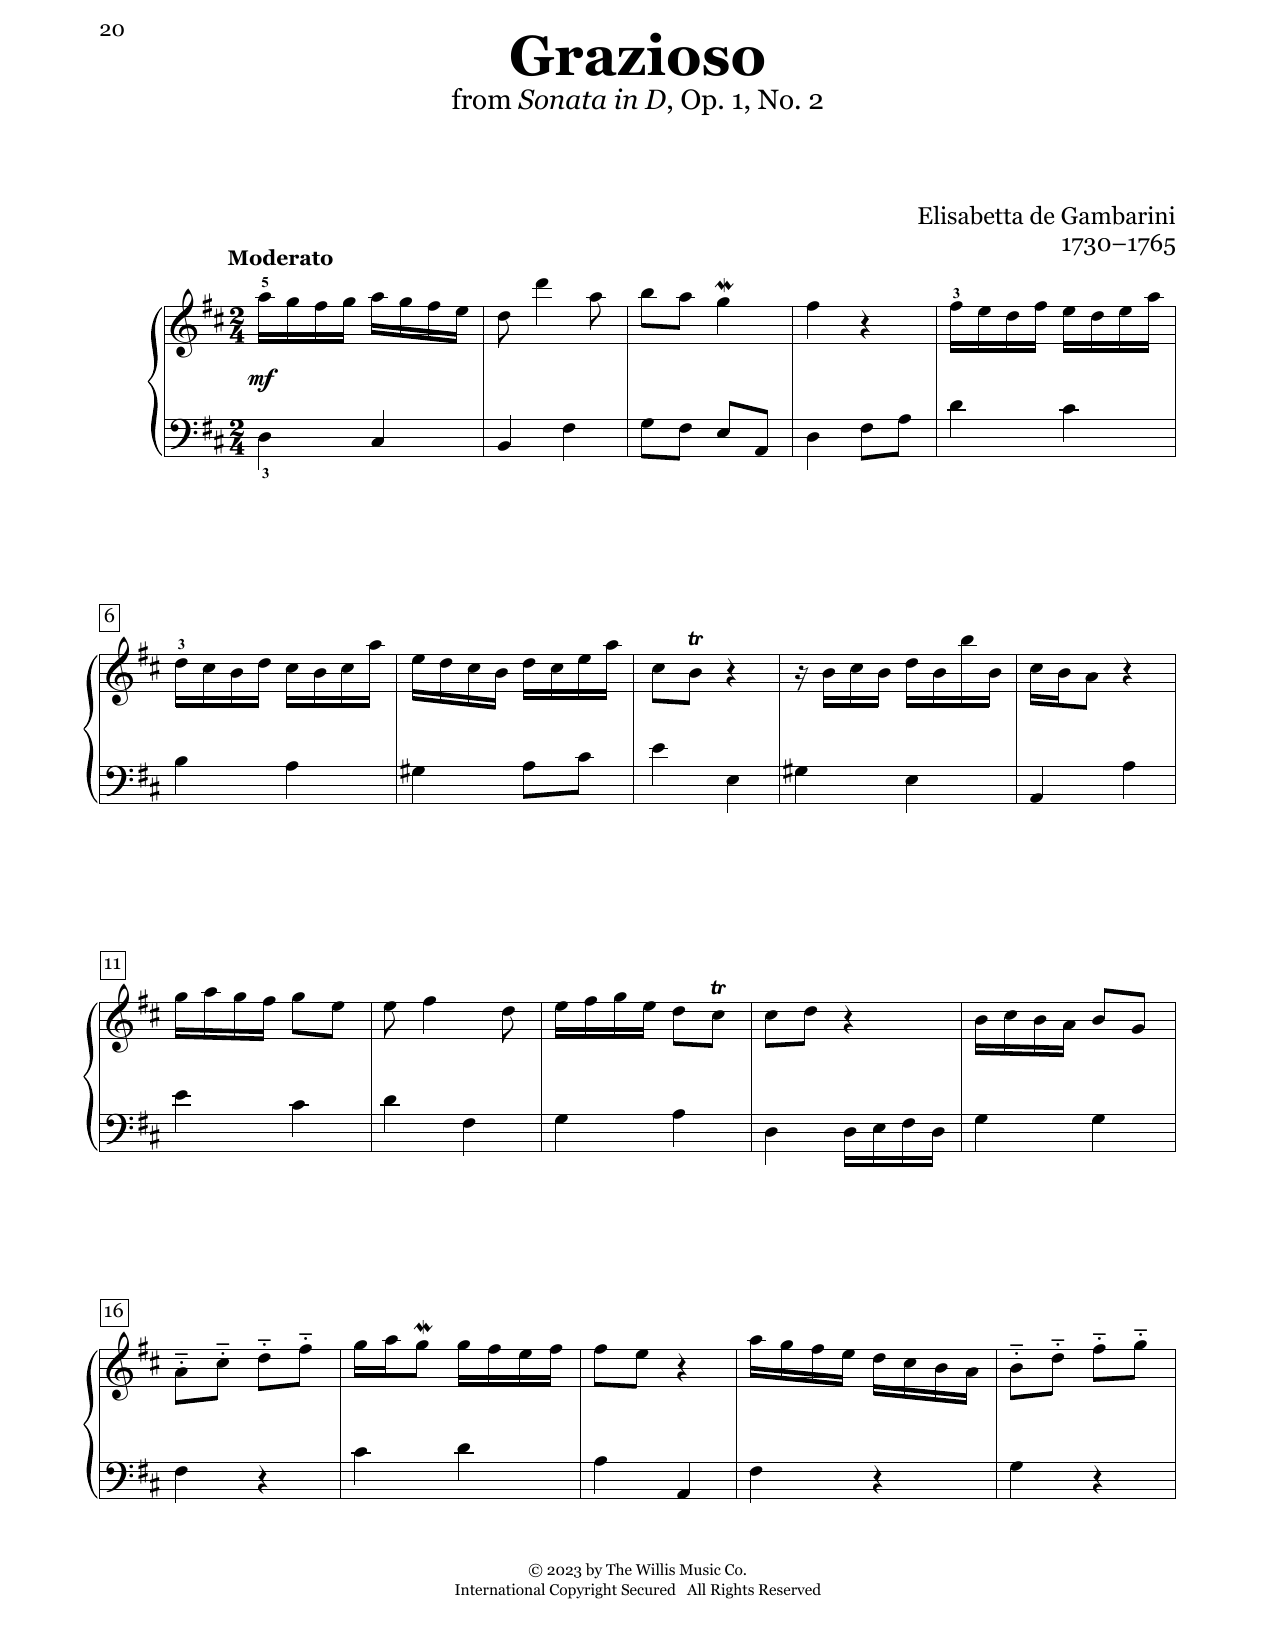 Elisabetta de Gambarini Grazioso, Op. 1, No. 2 sheet music notes printable PDF score